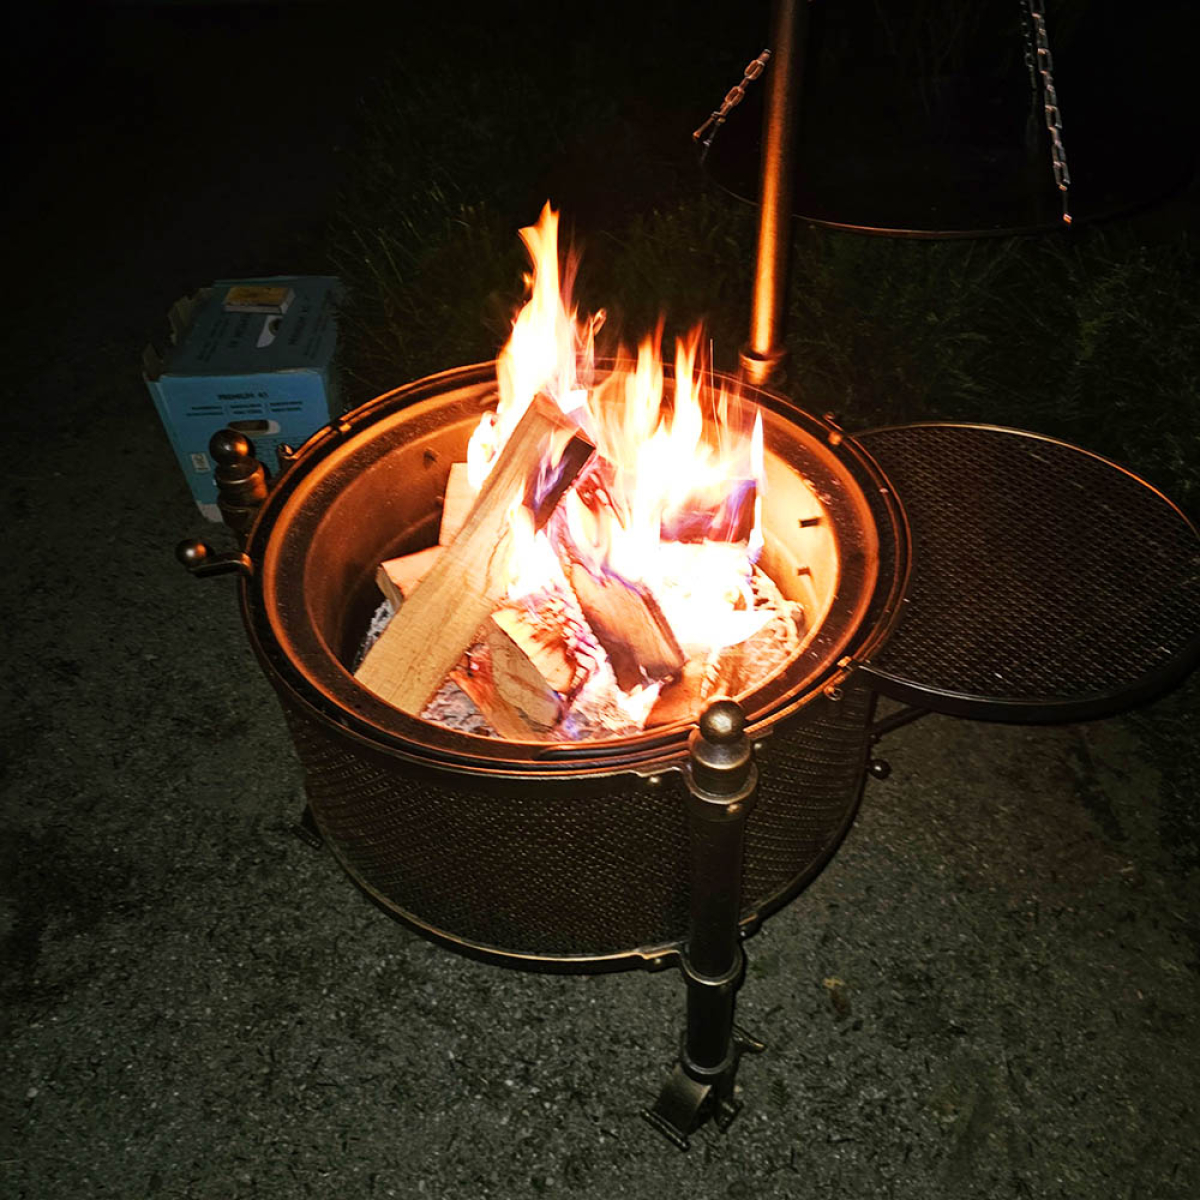 Original Fire Grill - Verwendung als Feuerkorb